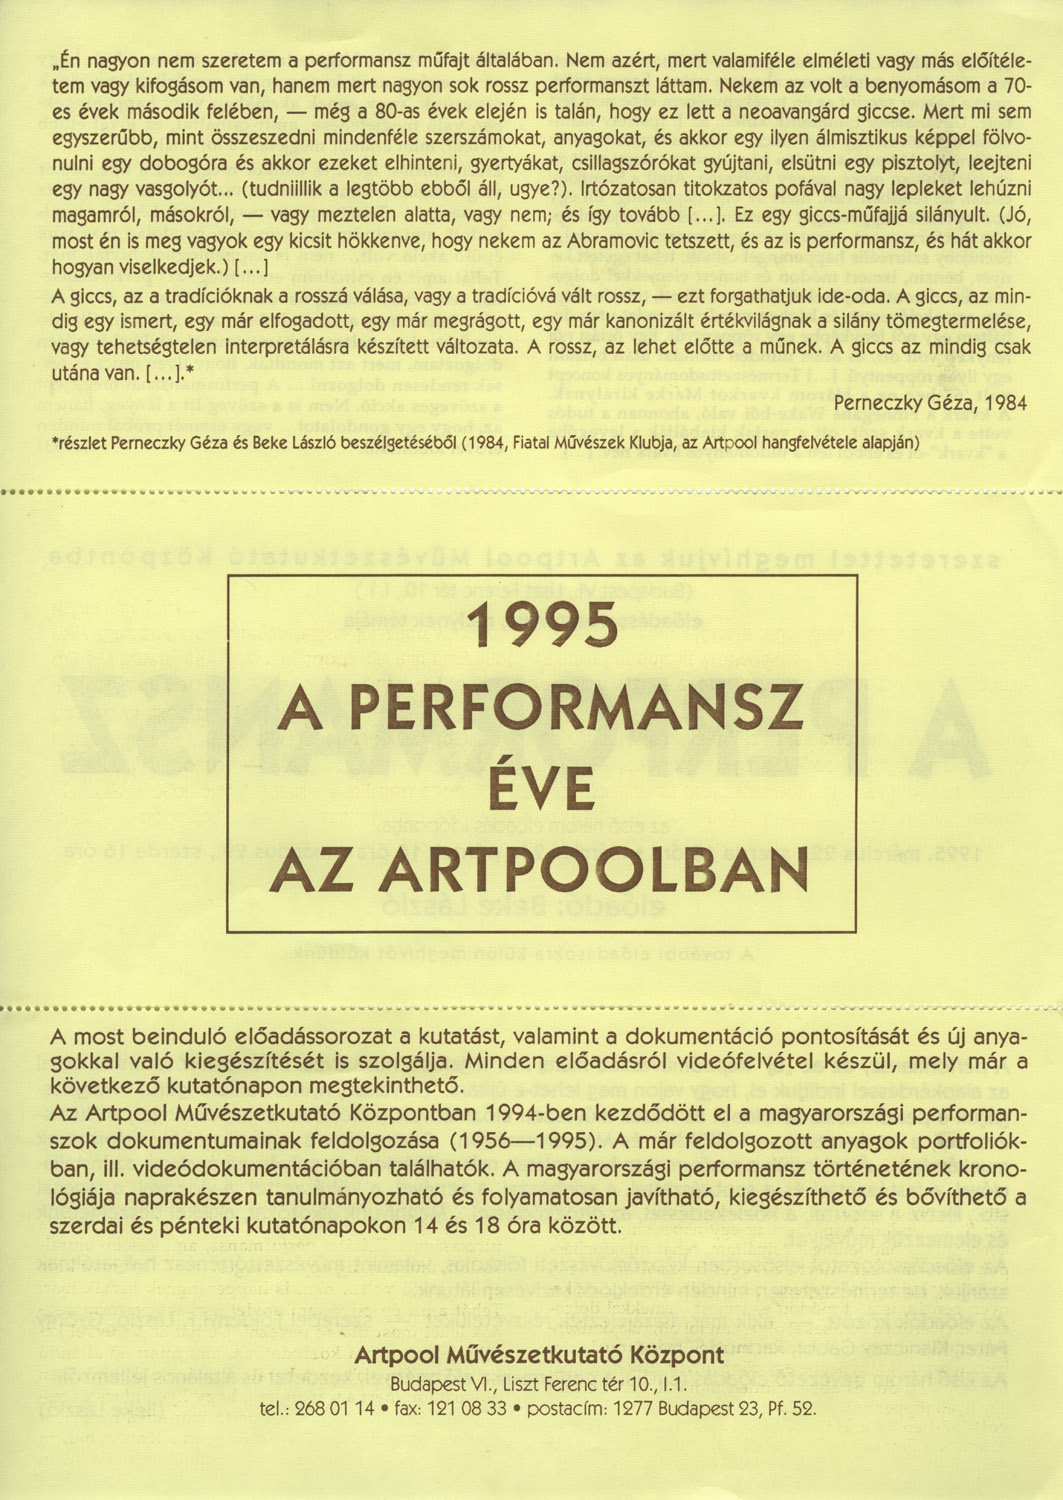 Collection of Artpool Art Research CenterGraphic design: György Galántai / Artpool